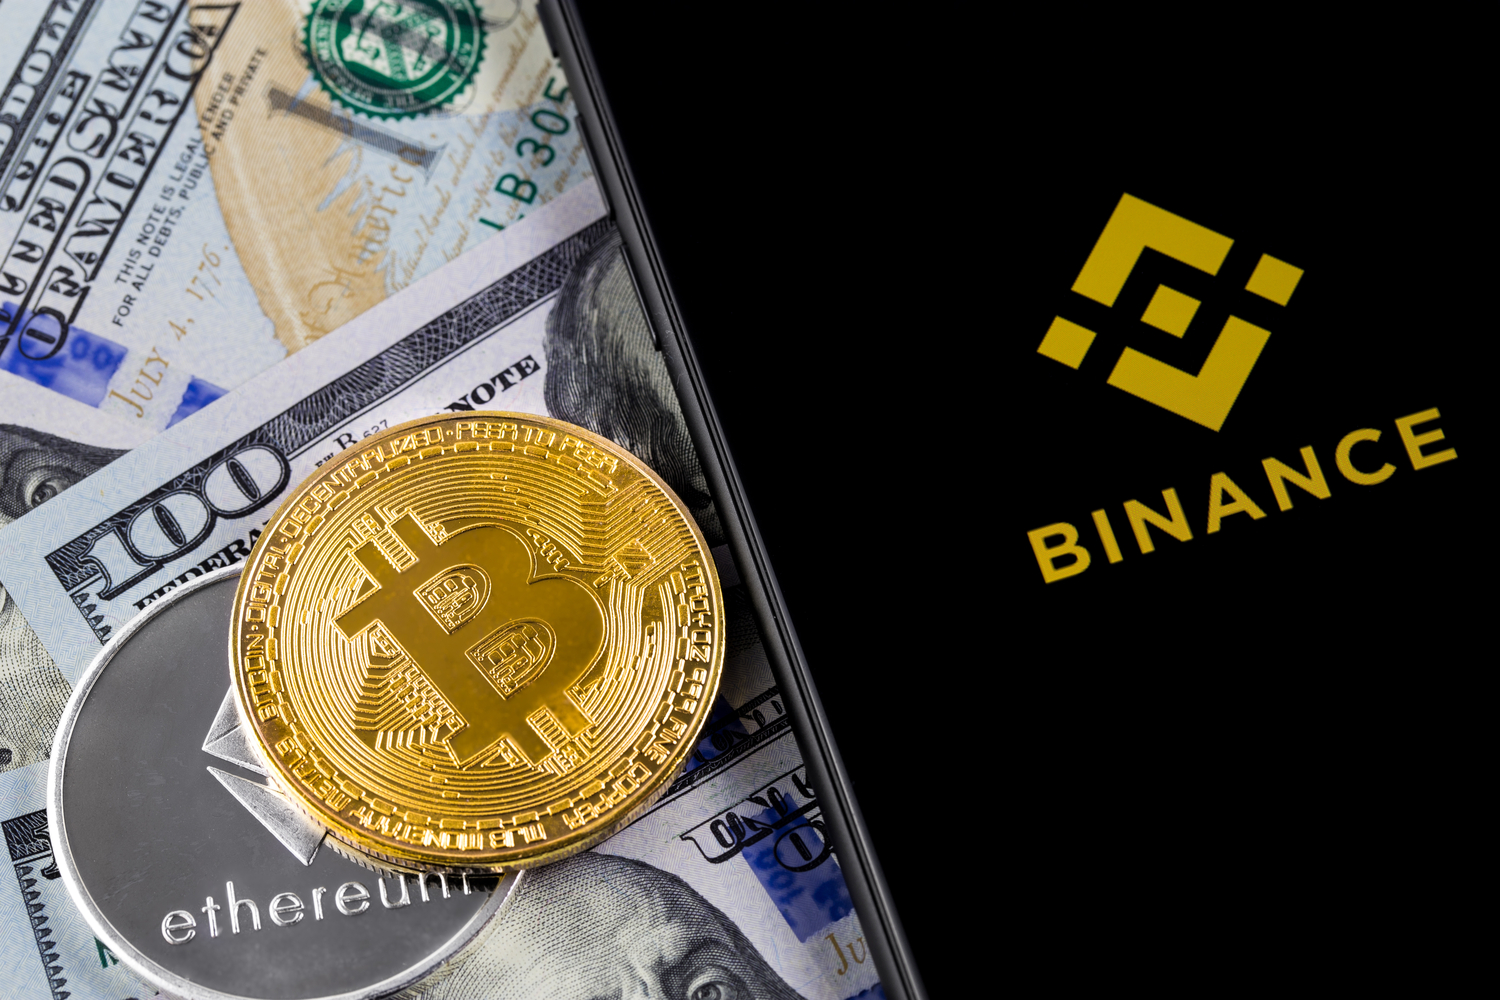 The Stolen Binance Bitcoin Is On The Move Again